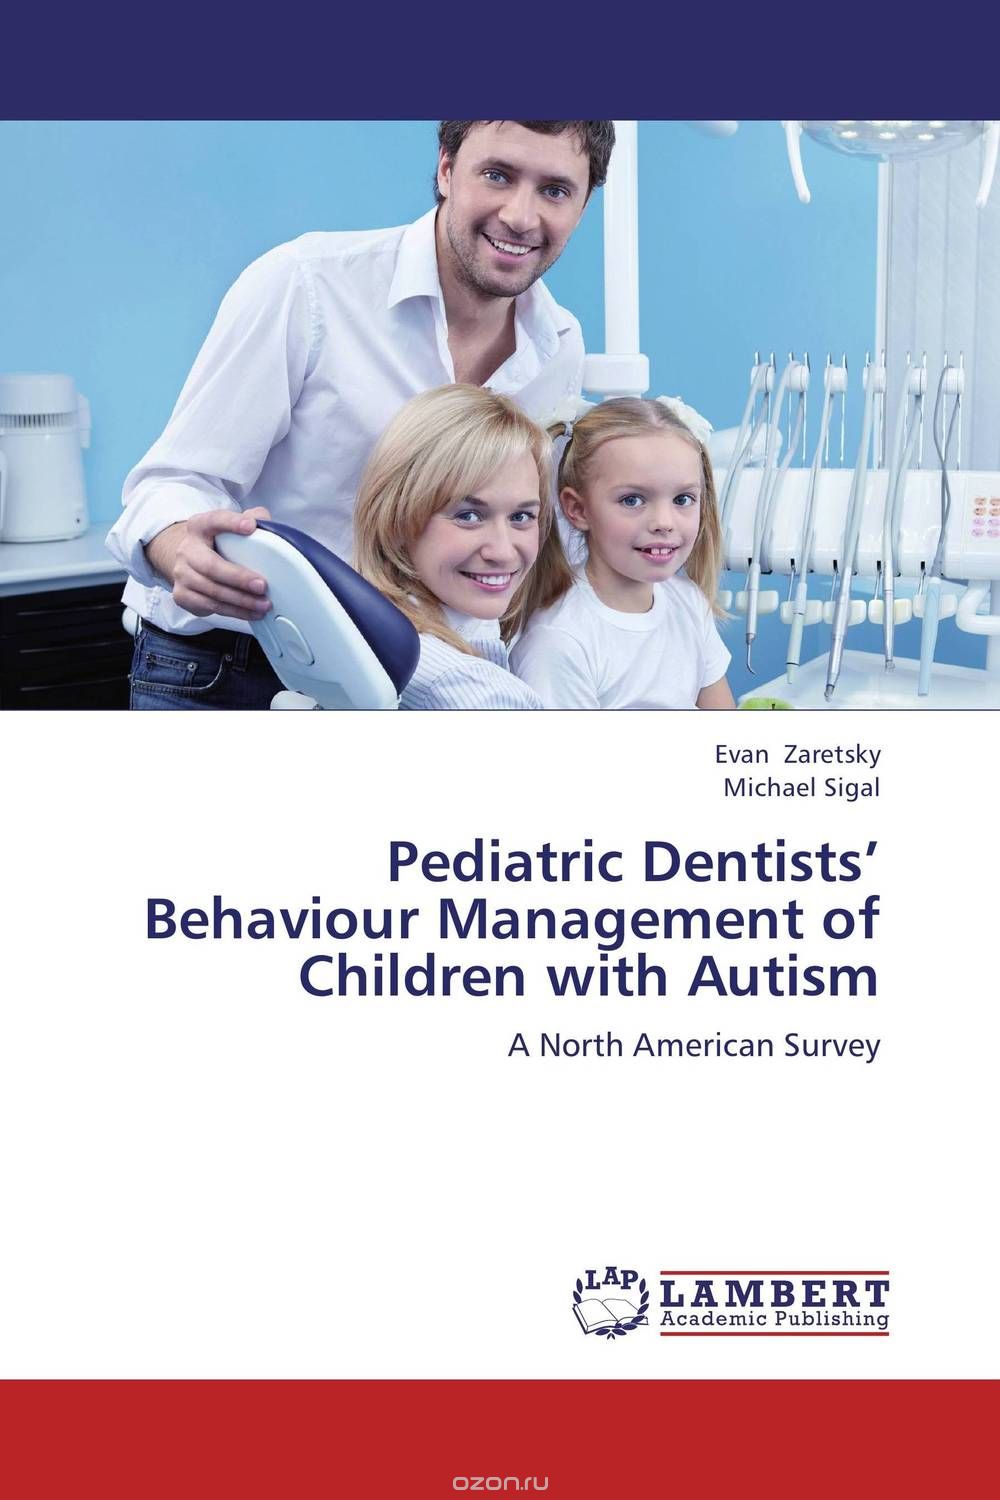 Скачать книгу "Pediatric Dentists’ Behaviour Management of Children with Autism"